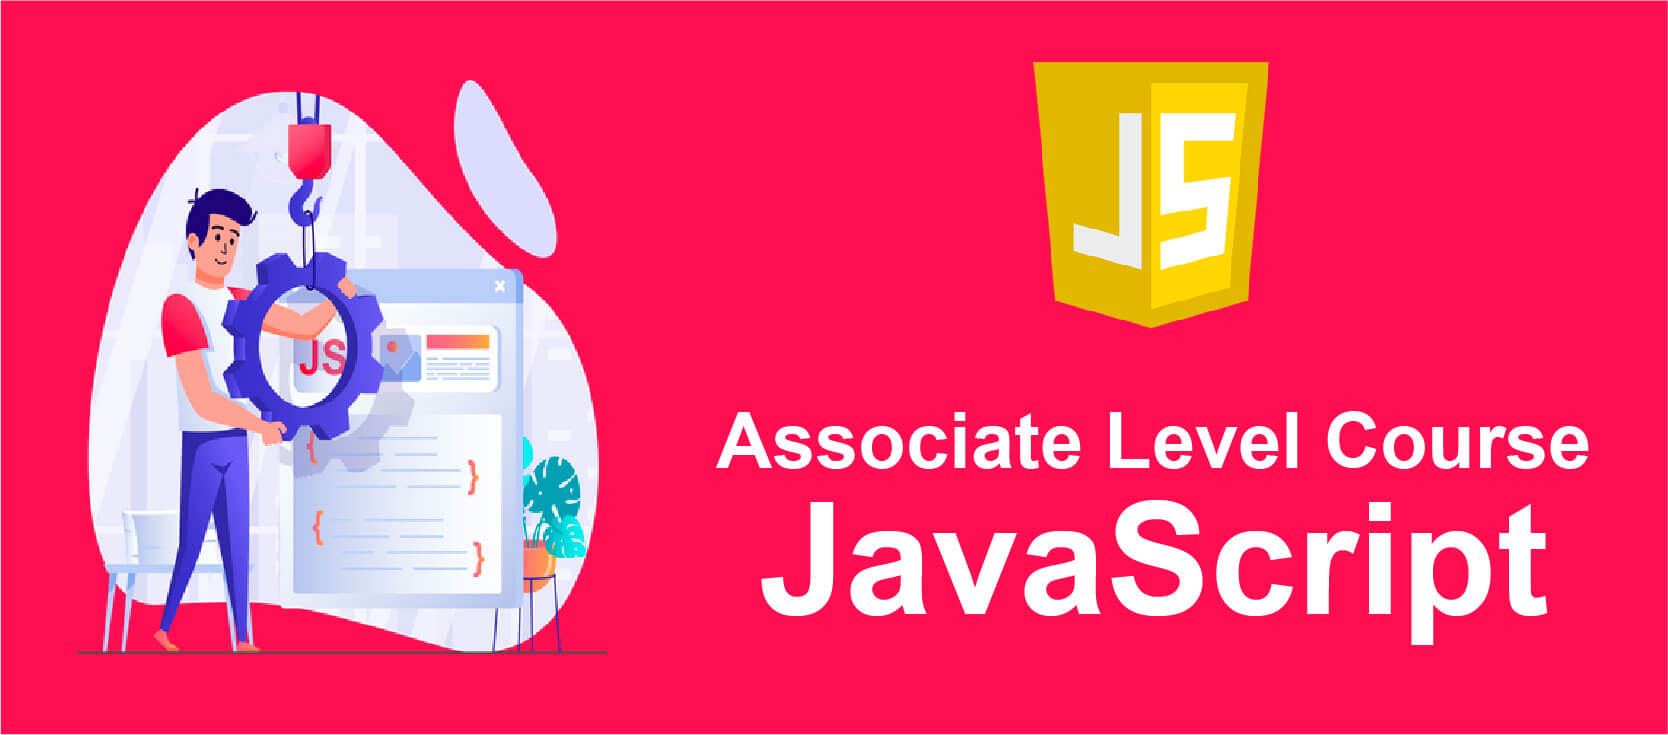 Associate Level Course in JavaScript